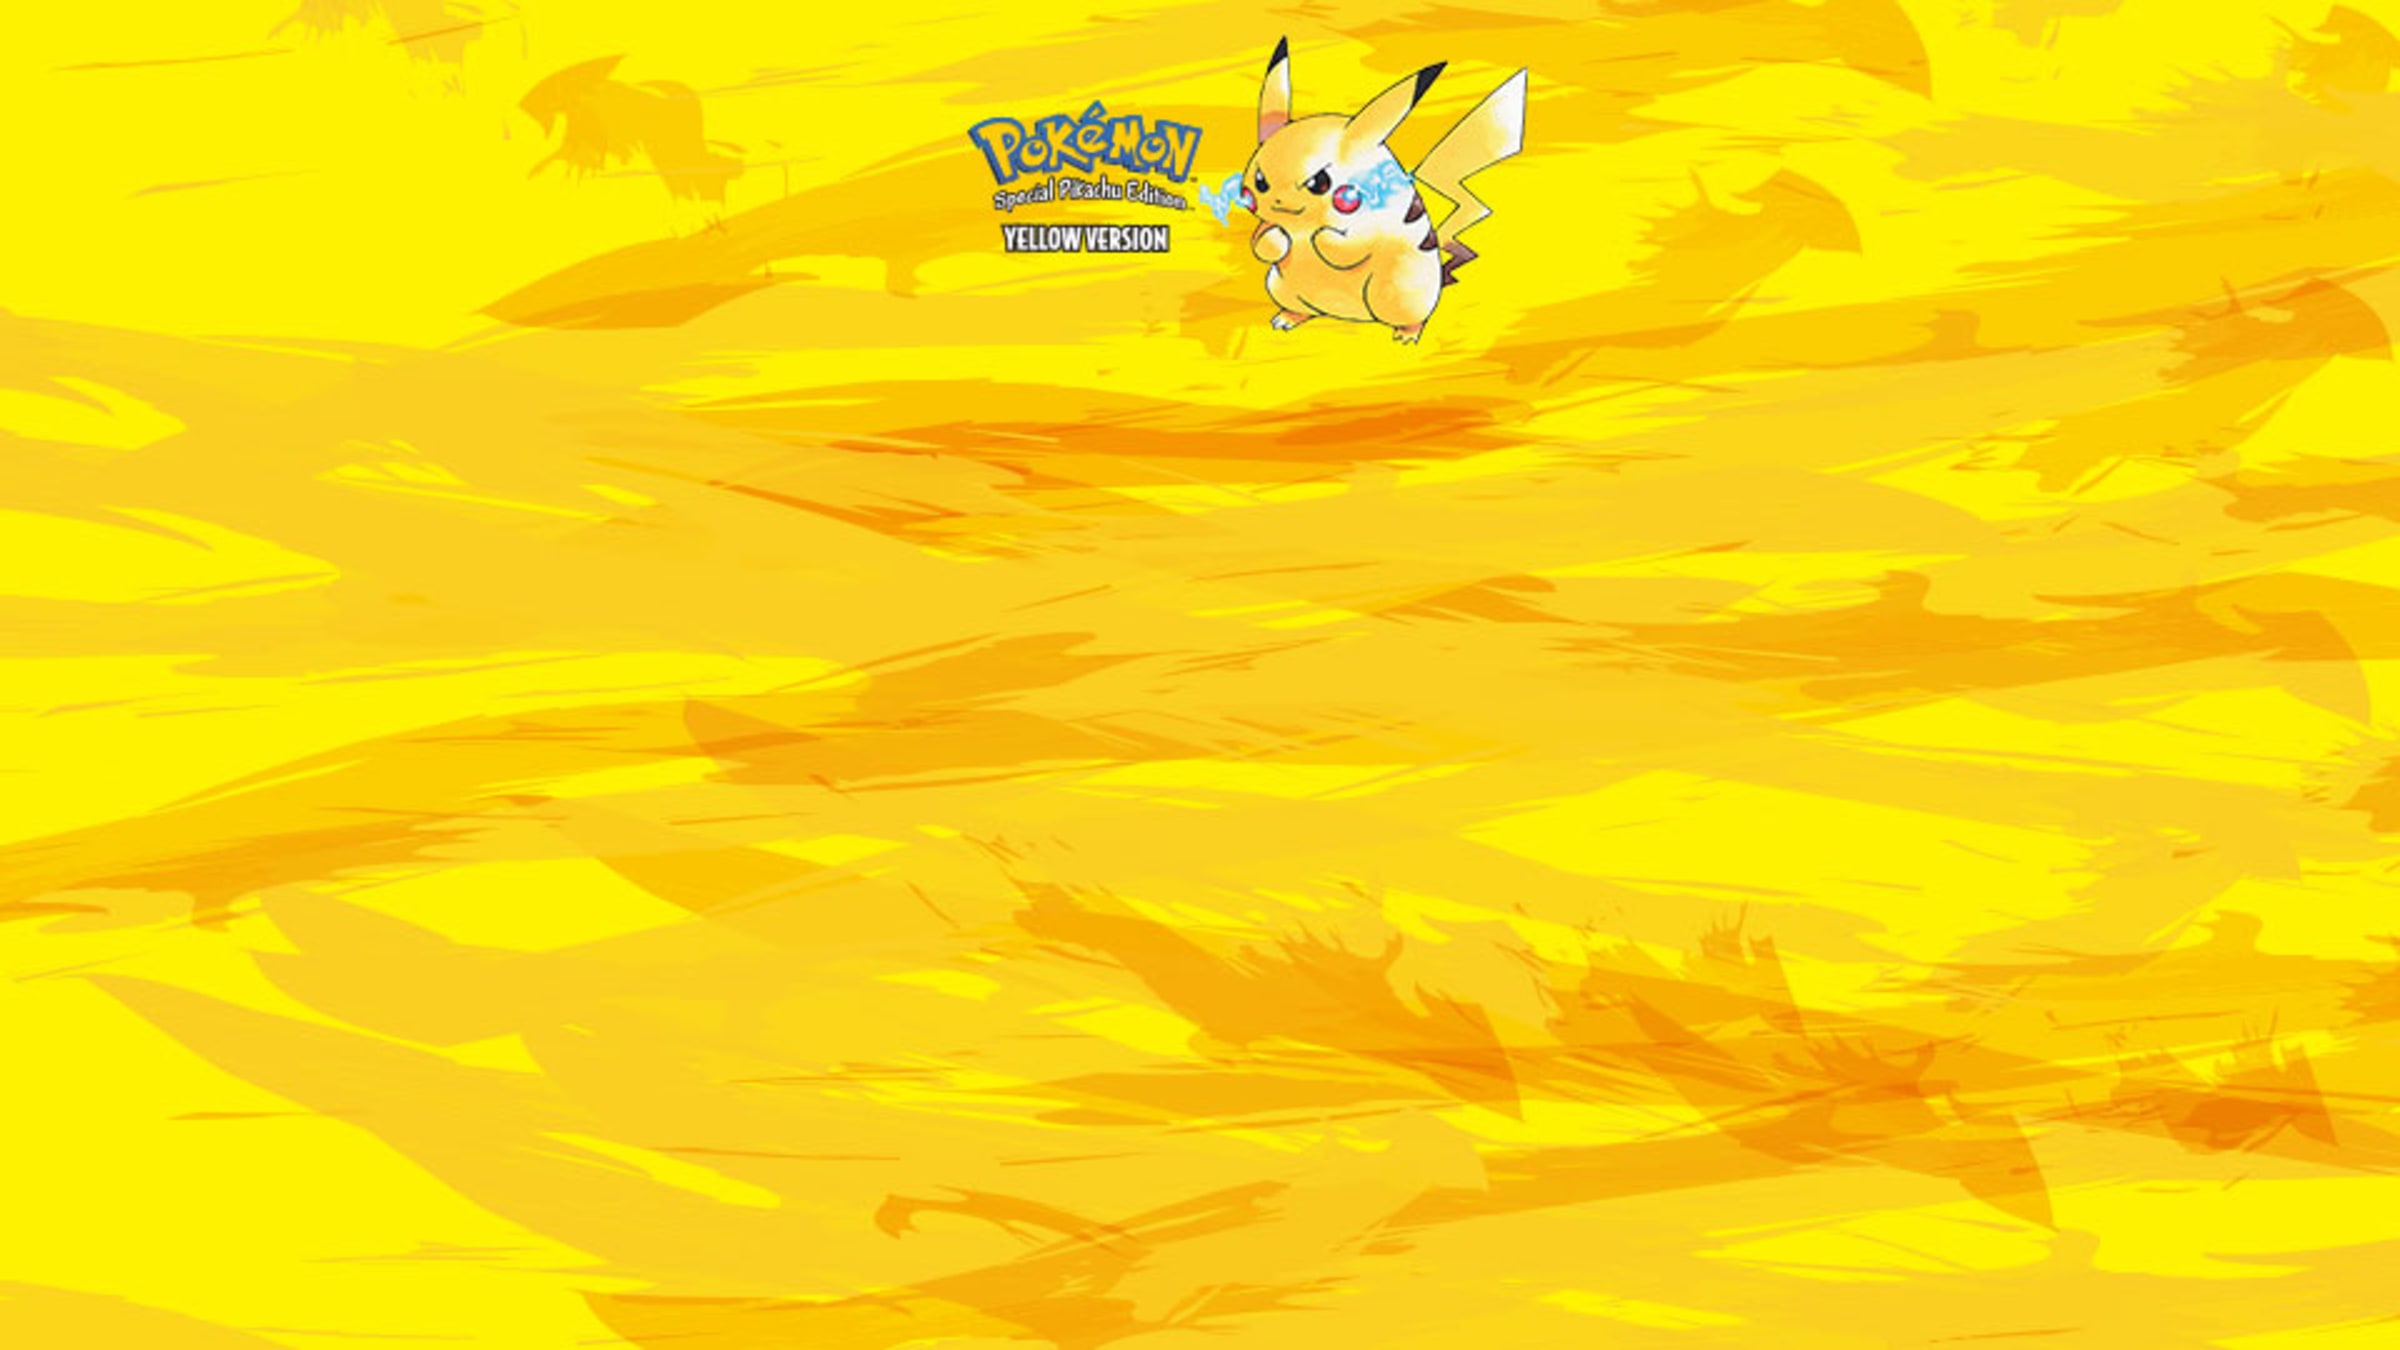 Pokémon Yellow Special Pikachu Edition for - Nintendo Site